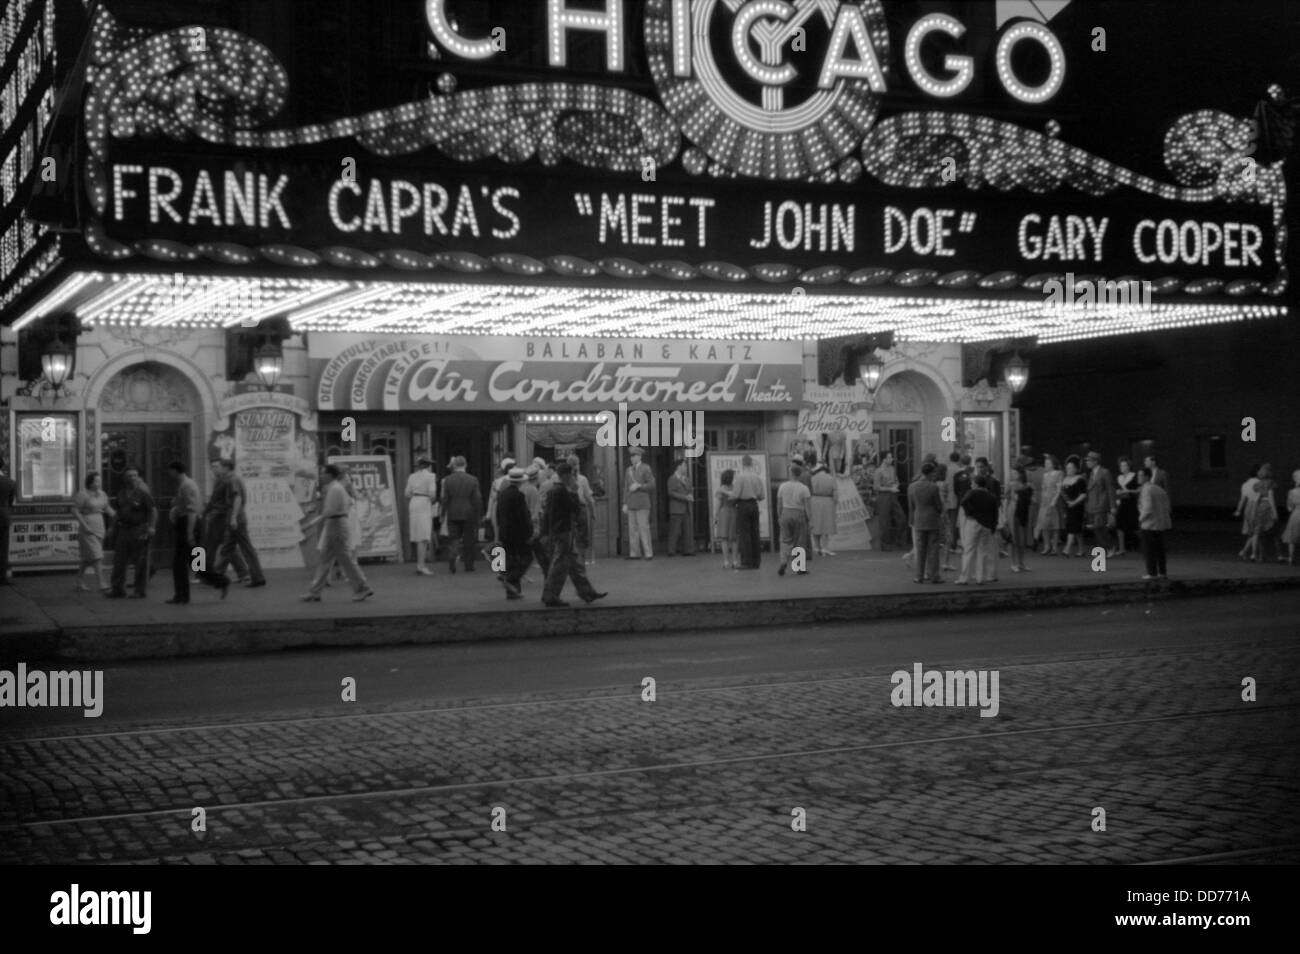 Cinéma Chicago montrant Frank Capra's, "Meet John Doe", avec Gary Cooper, en juillet 1941. Photo de John Vachon. Banque D'Images